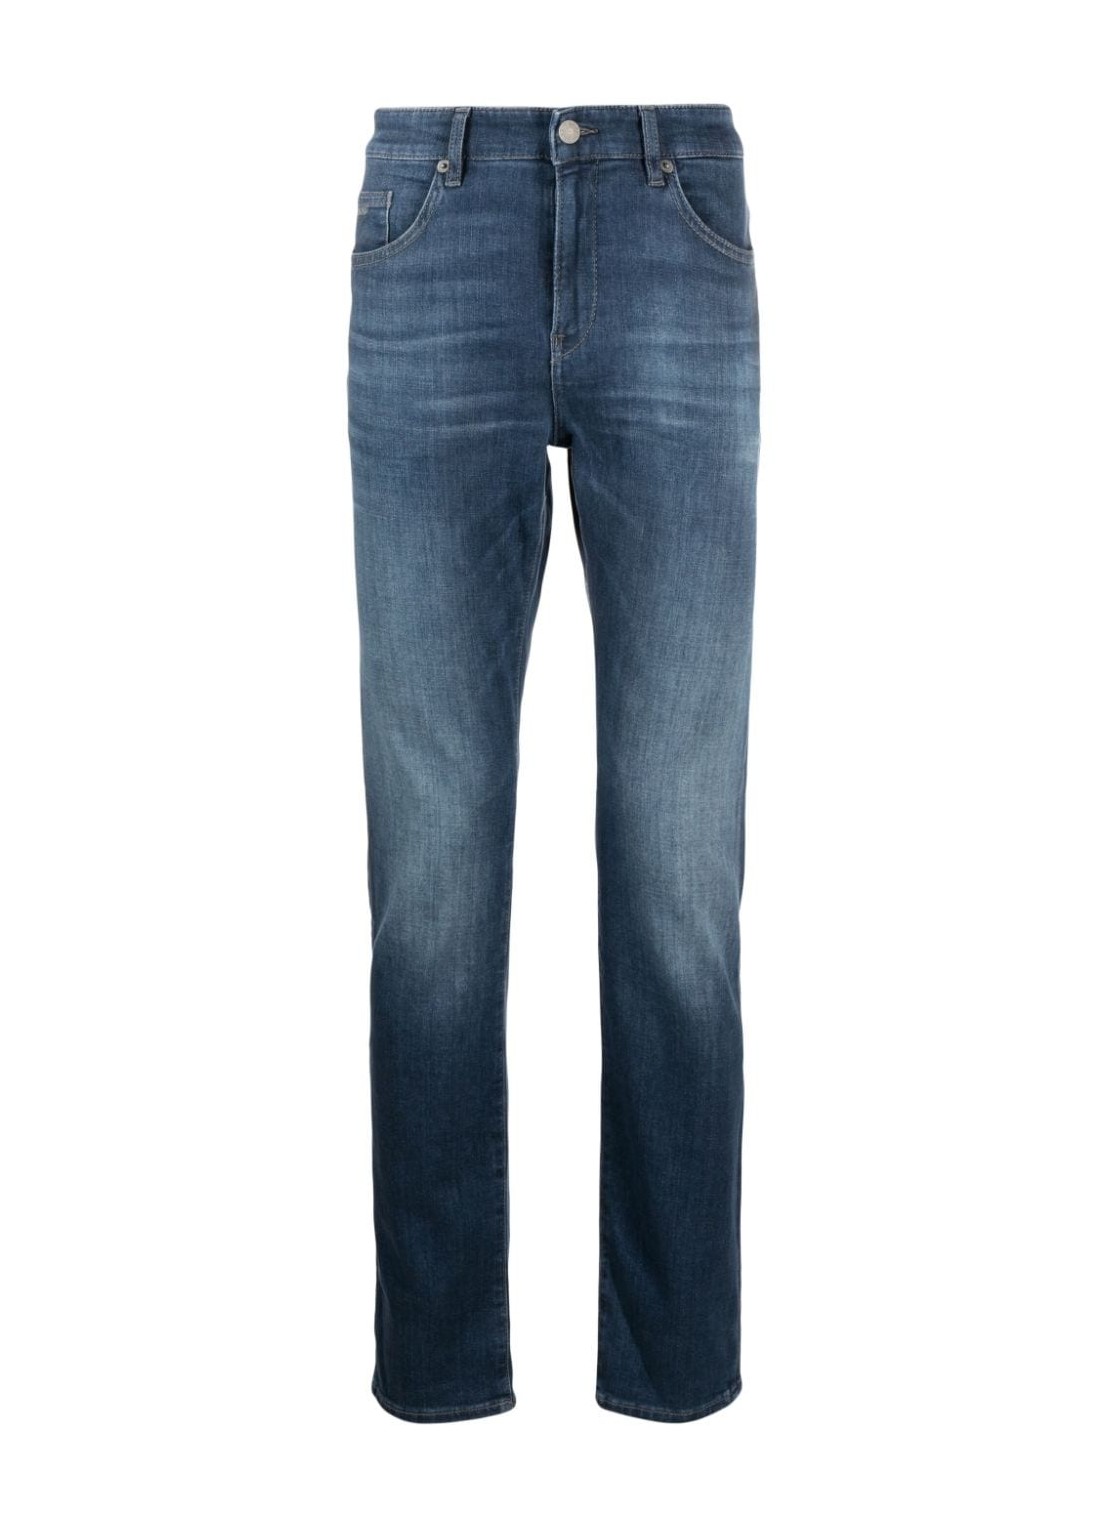 Pantalon jeans boss denim man delaware3-1 50509445 422 talla 36
 